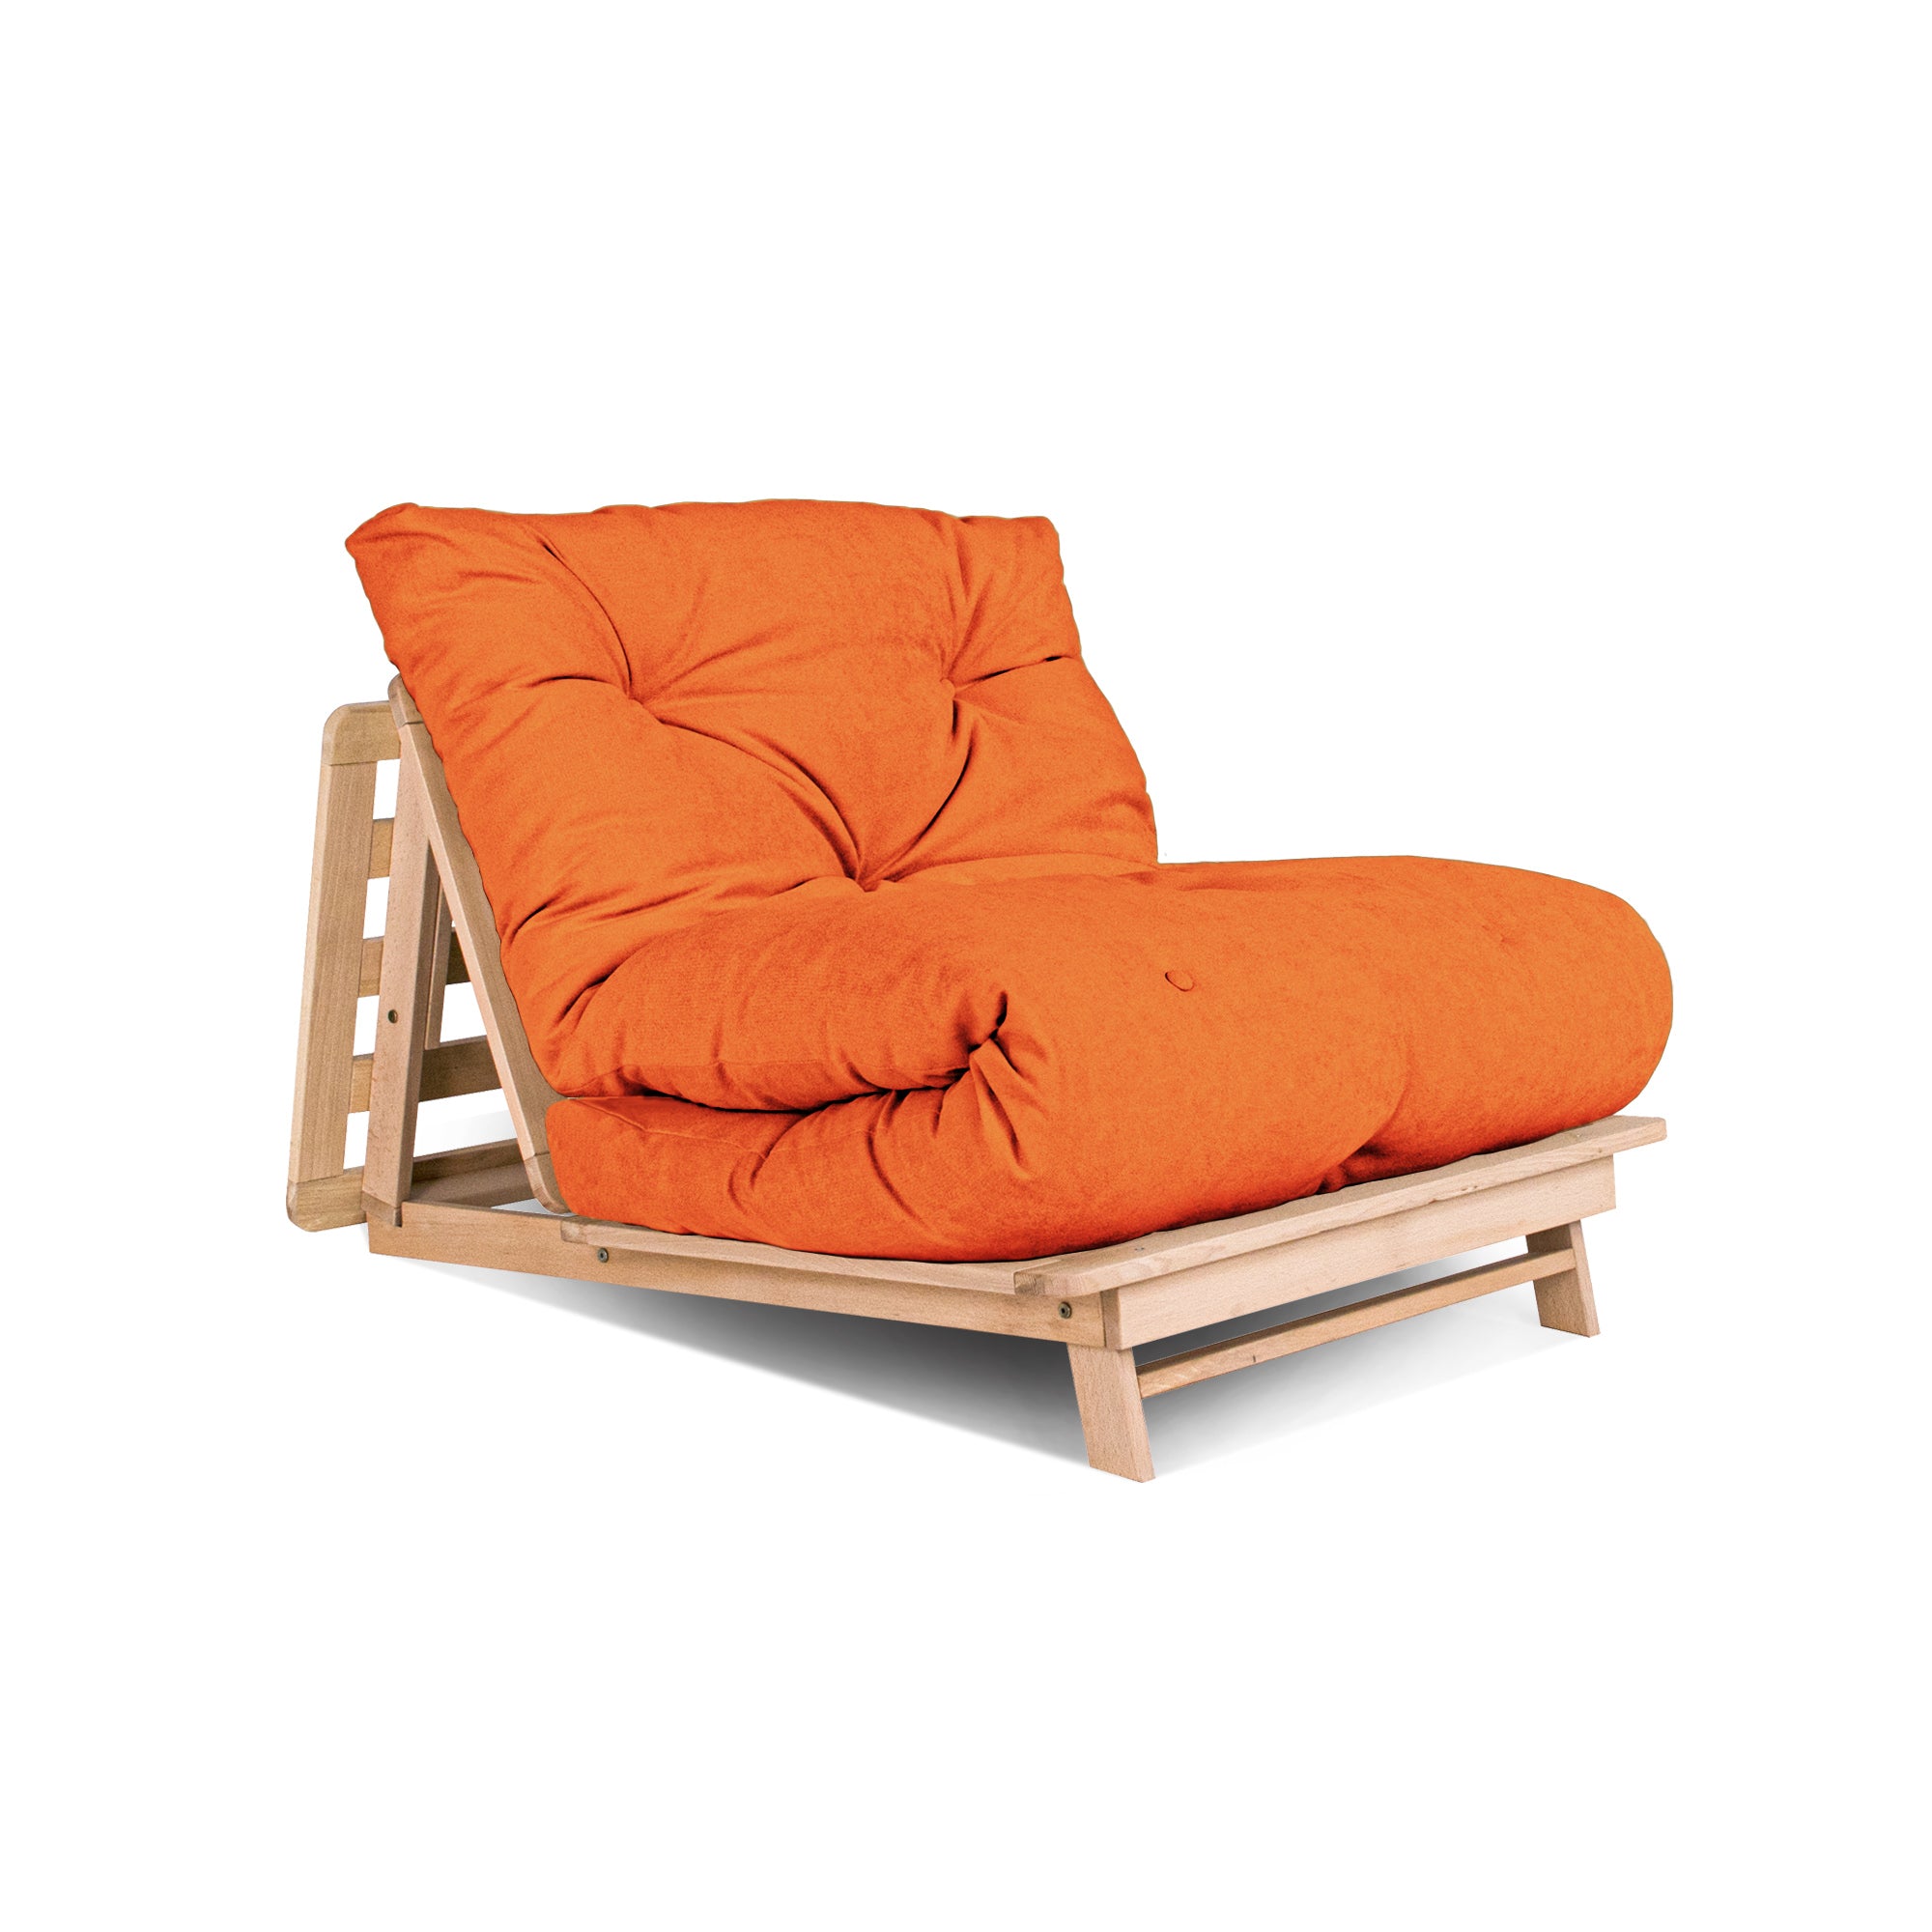 LAYTI-90 Futon Chair, Beech Wood Frame, Natural Colour-orange fabric